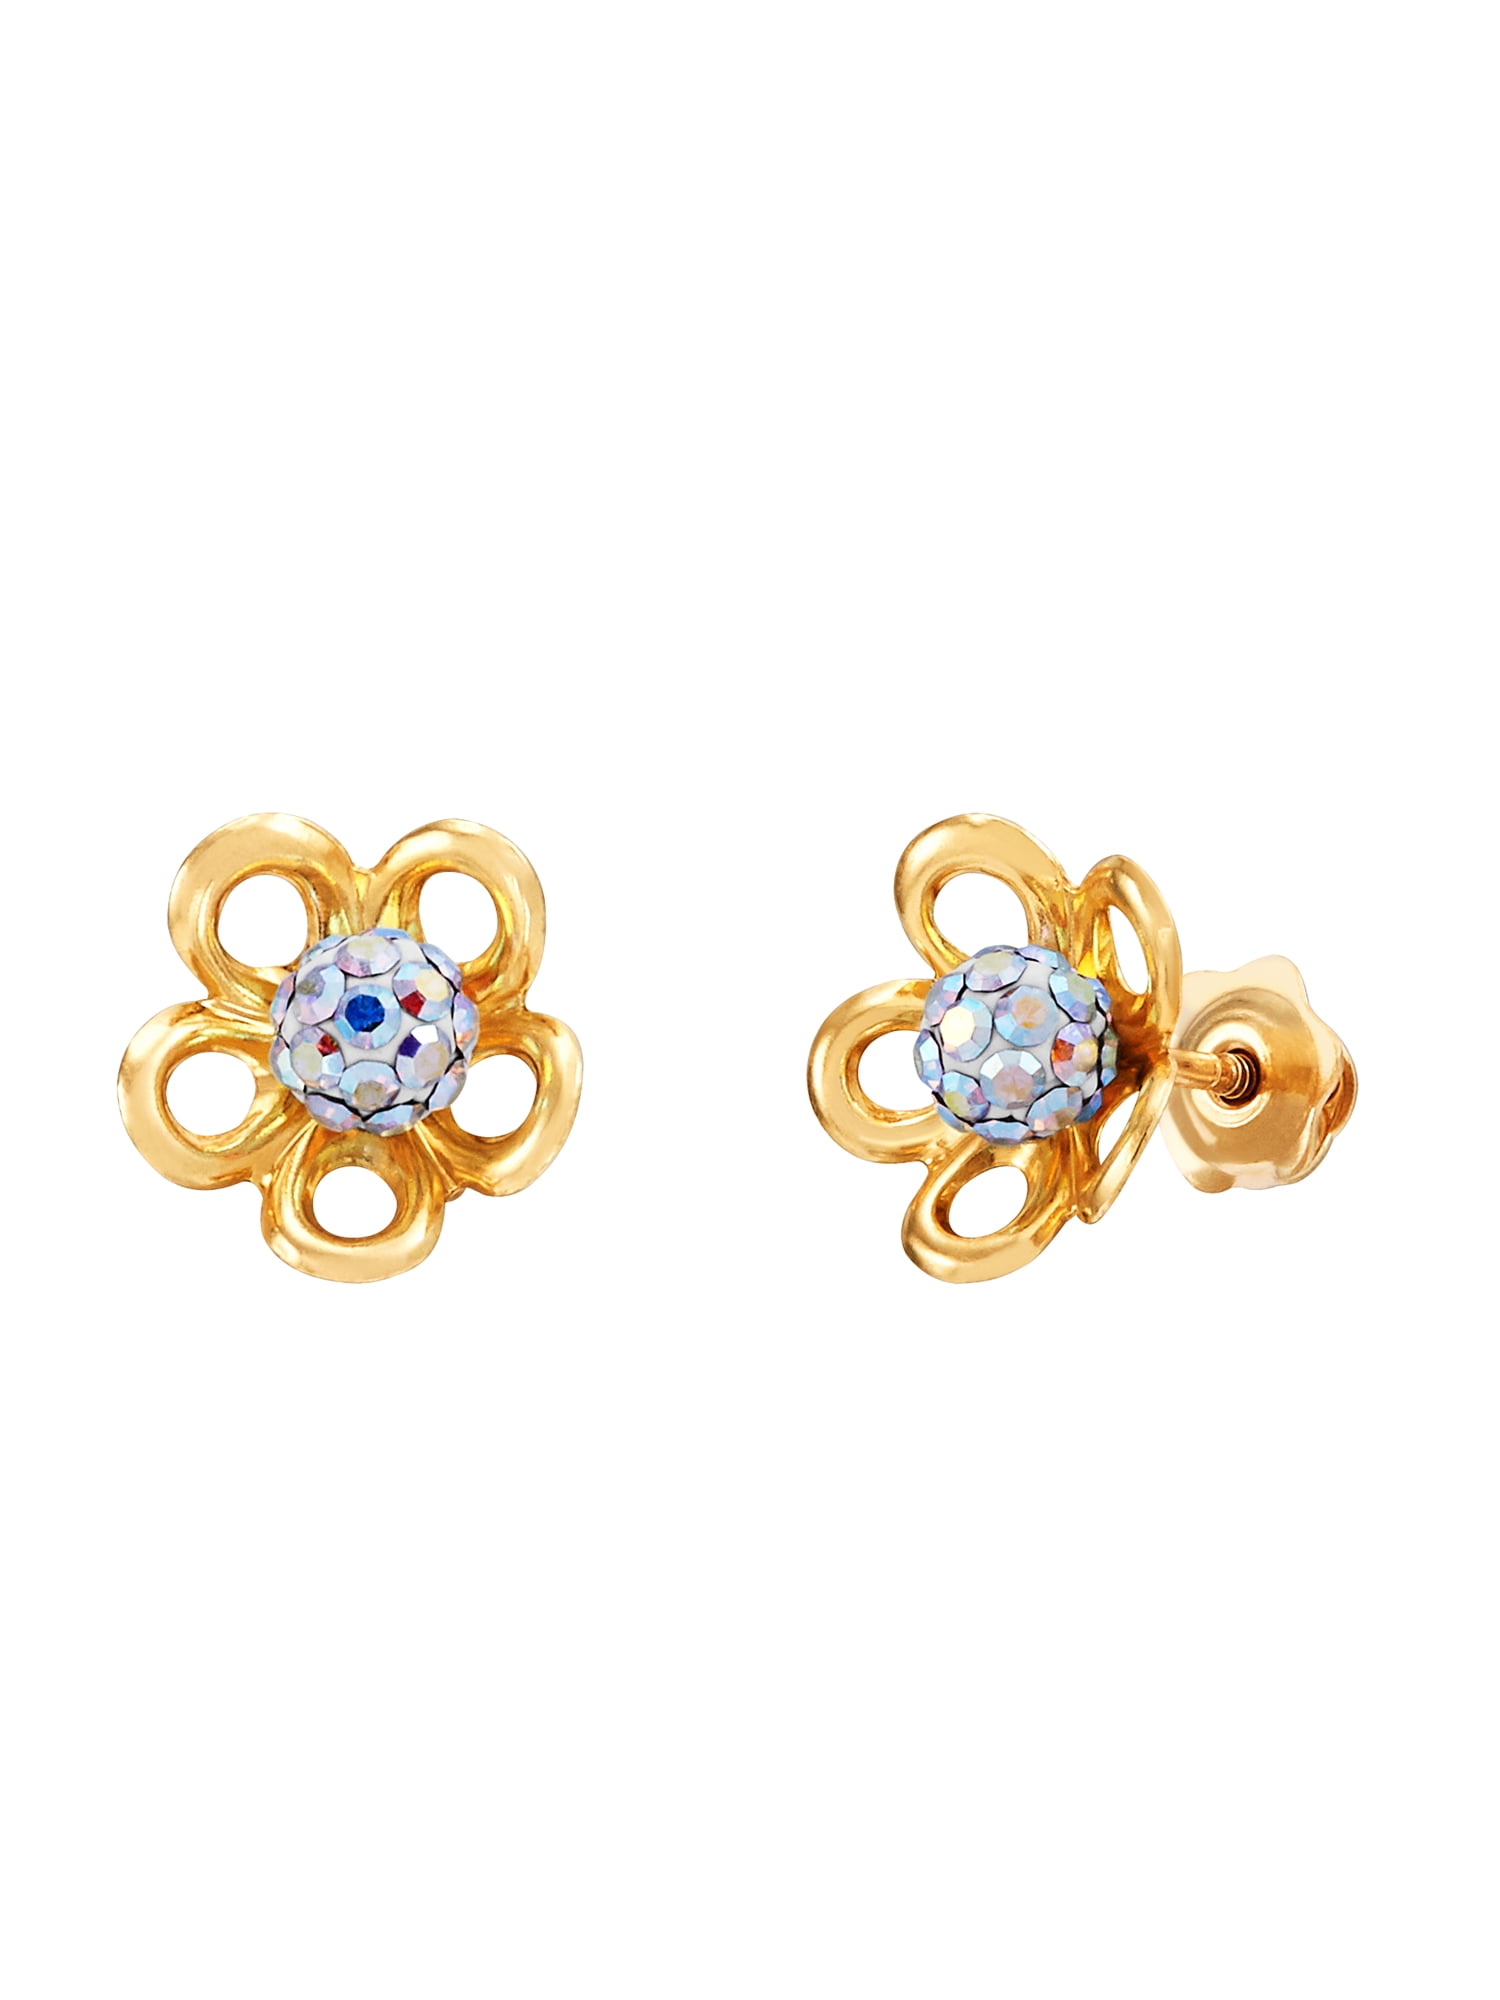 Crystal Star Stud Earrings Gold Tone Aurora Borealis EI42 Fashion Jewelry 